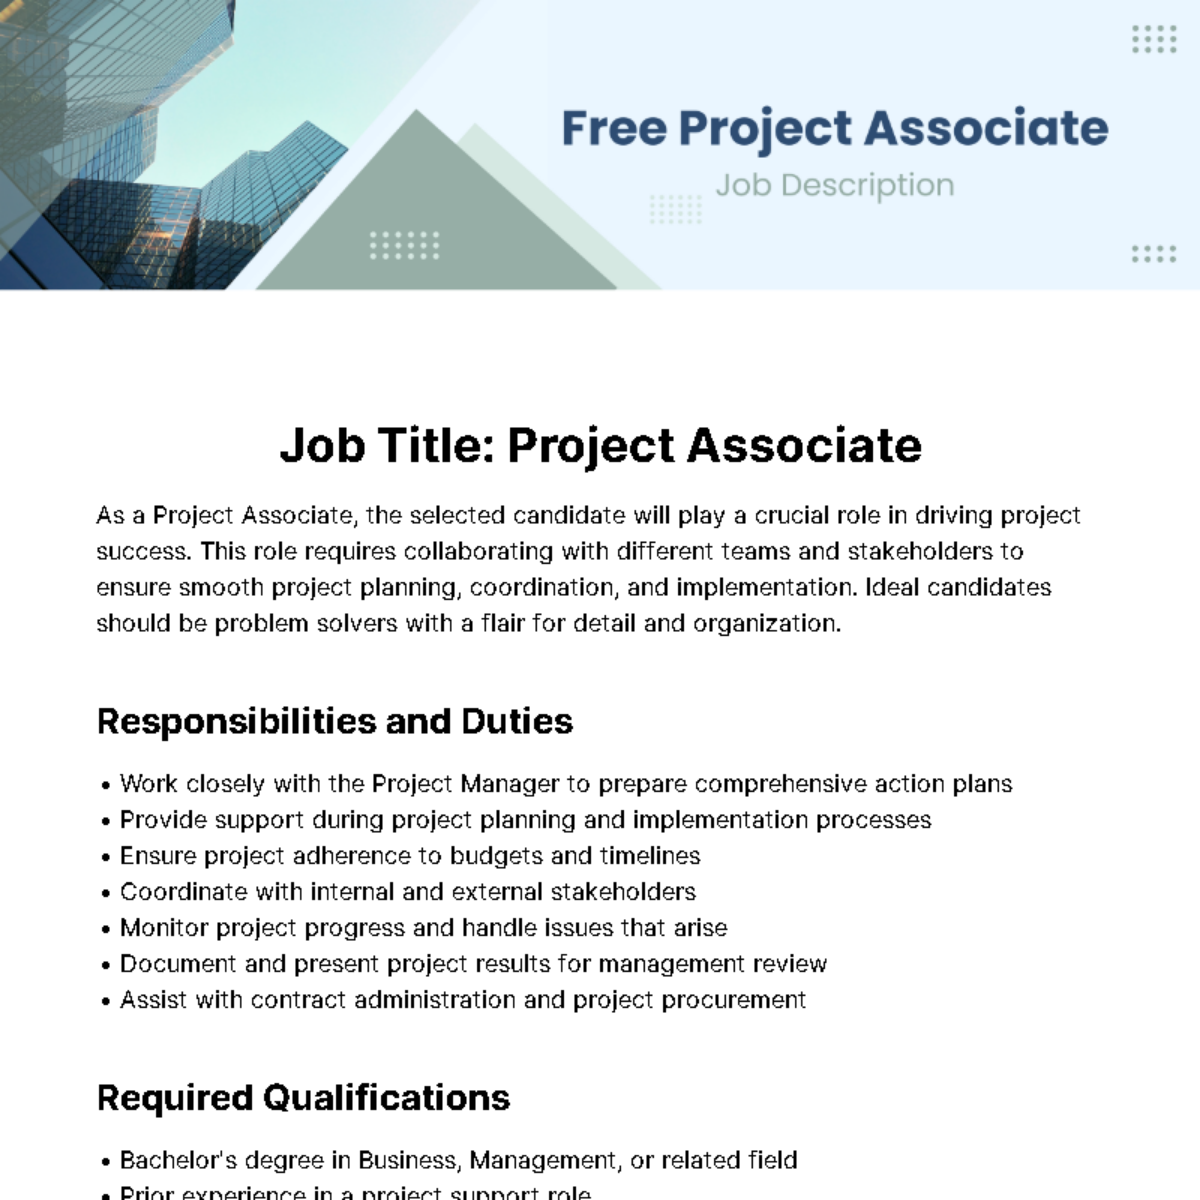 Free Project Associate Job Description Template